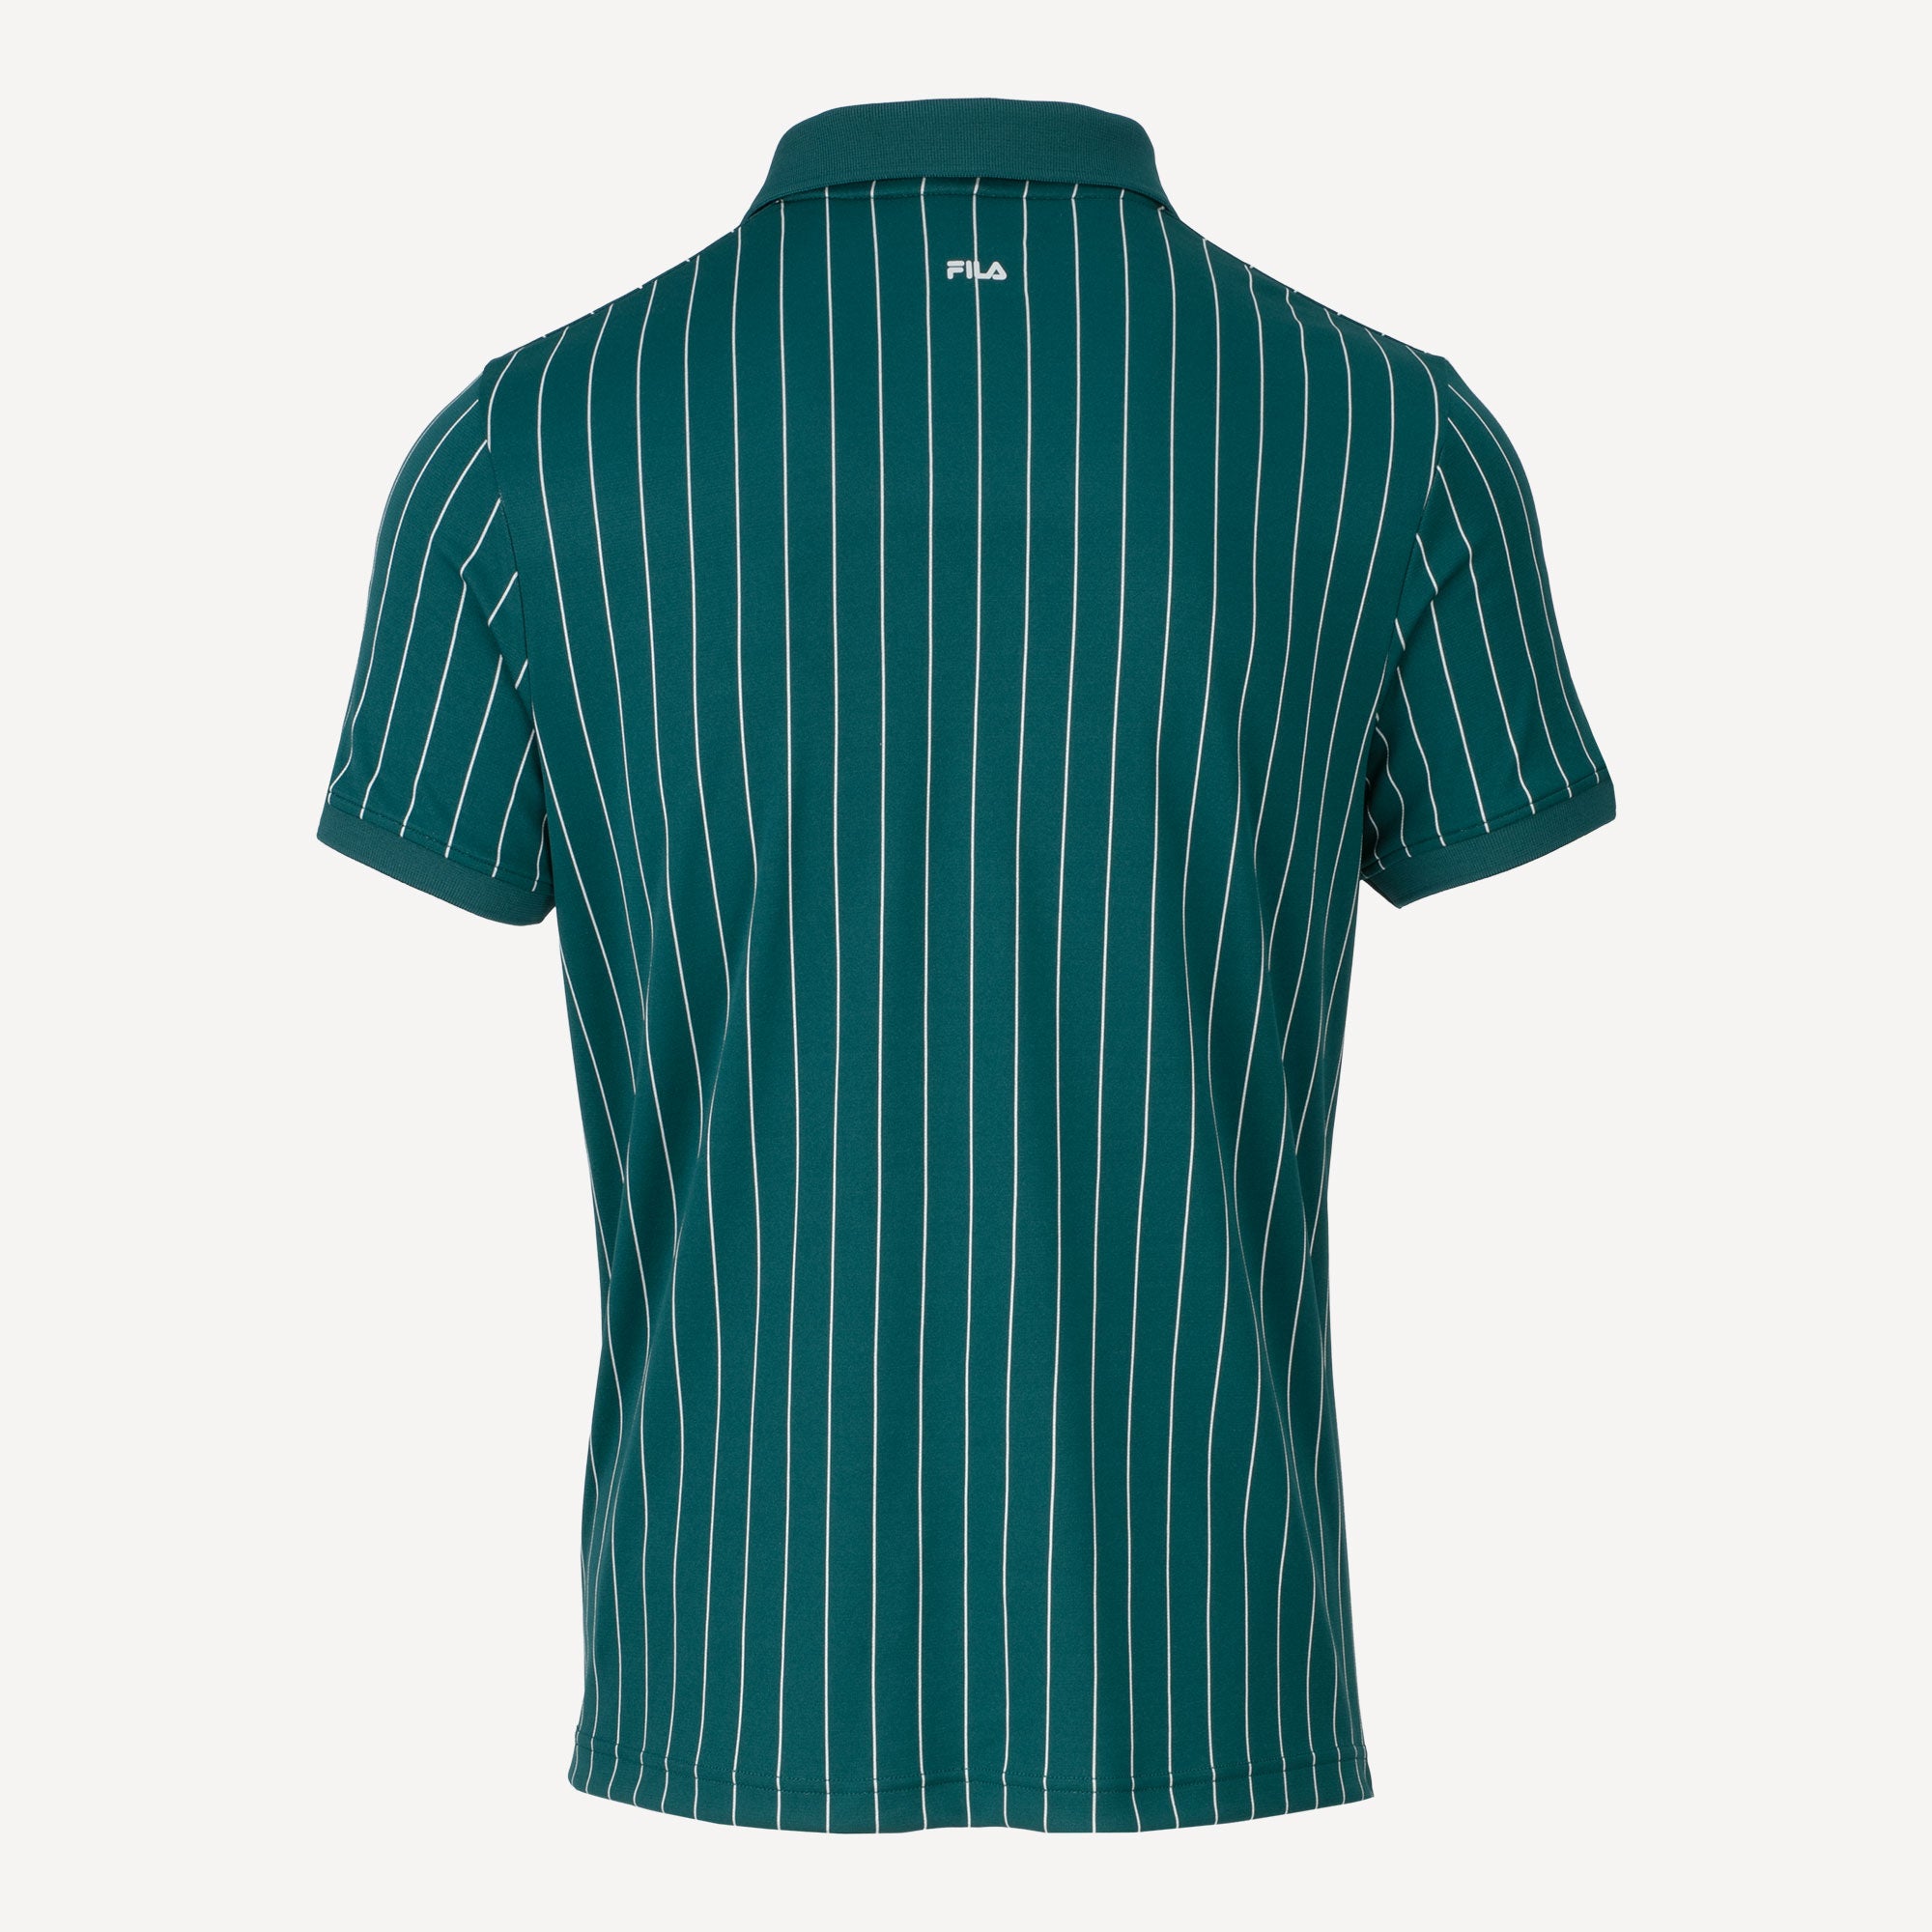 Fila Men's Stripes Tennis Polo Green (2)